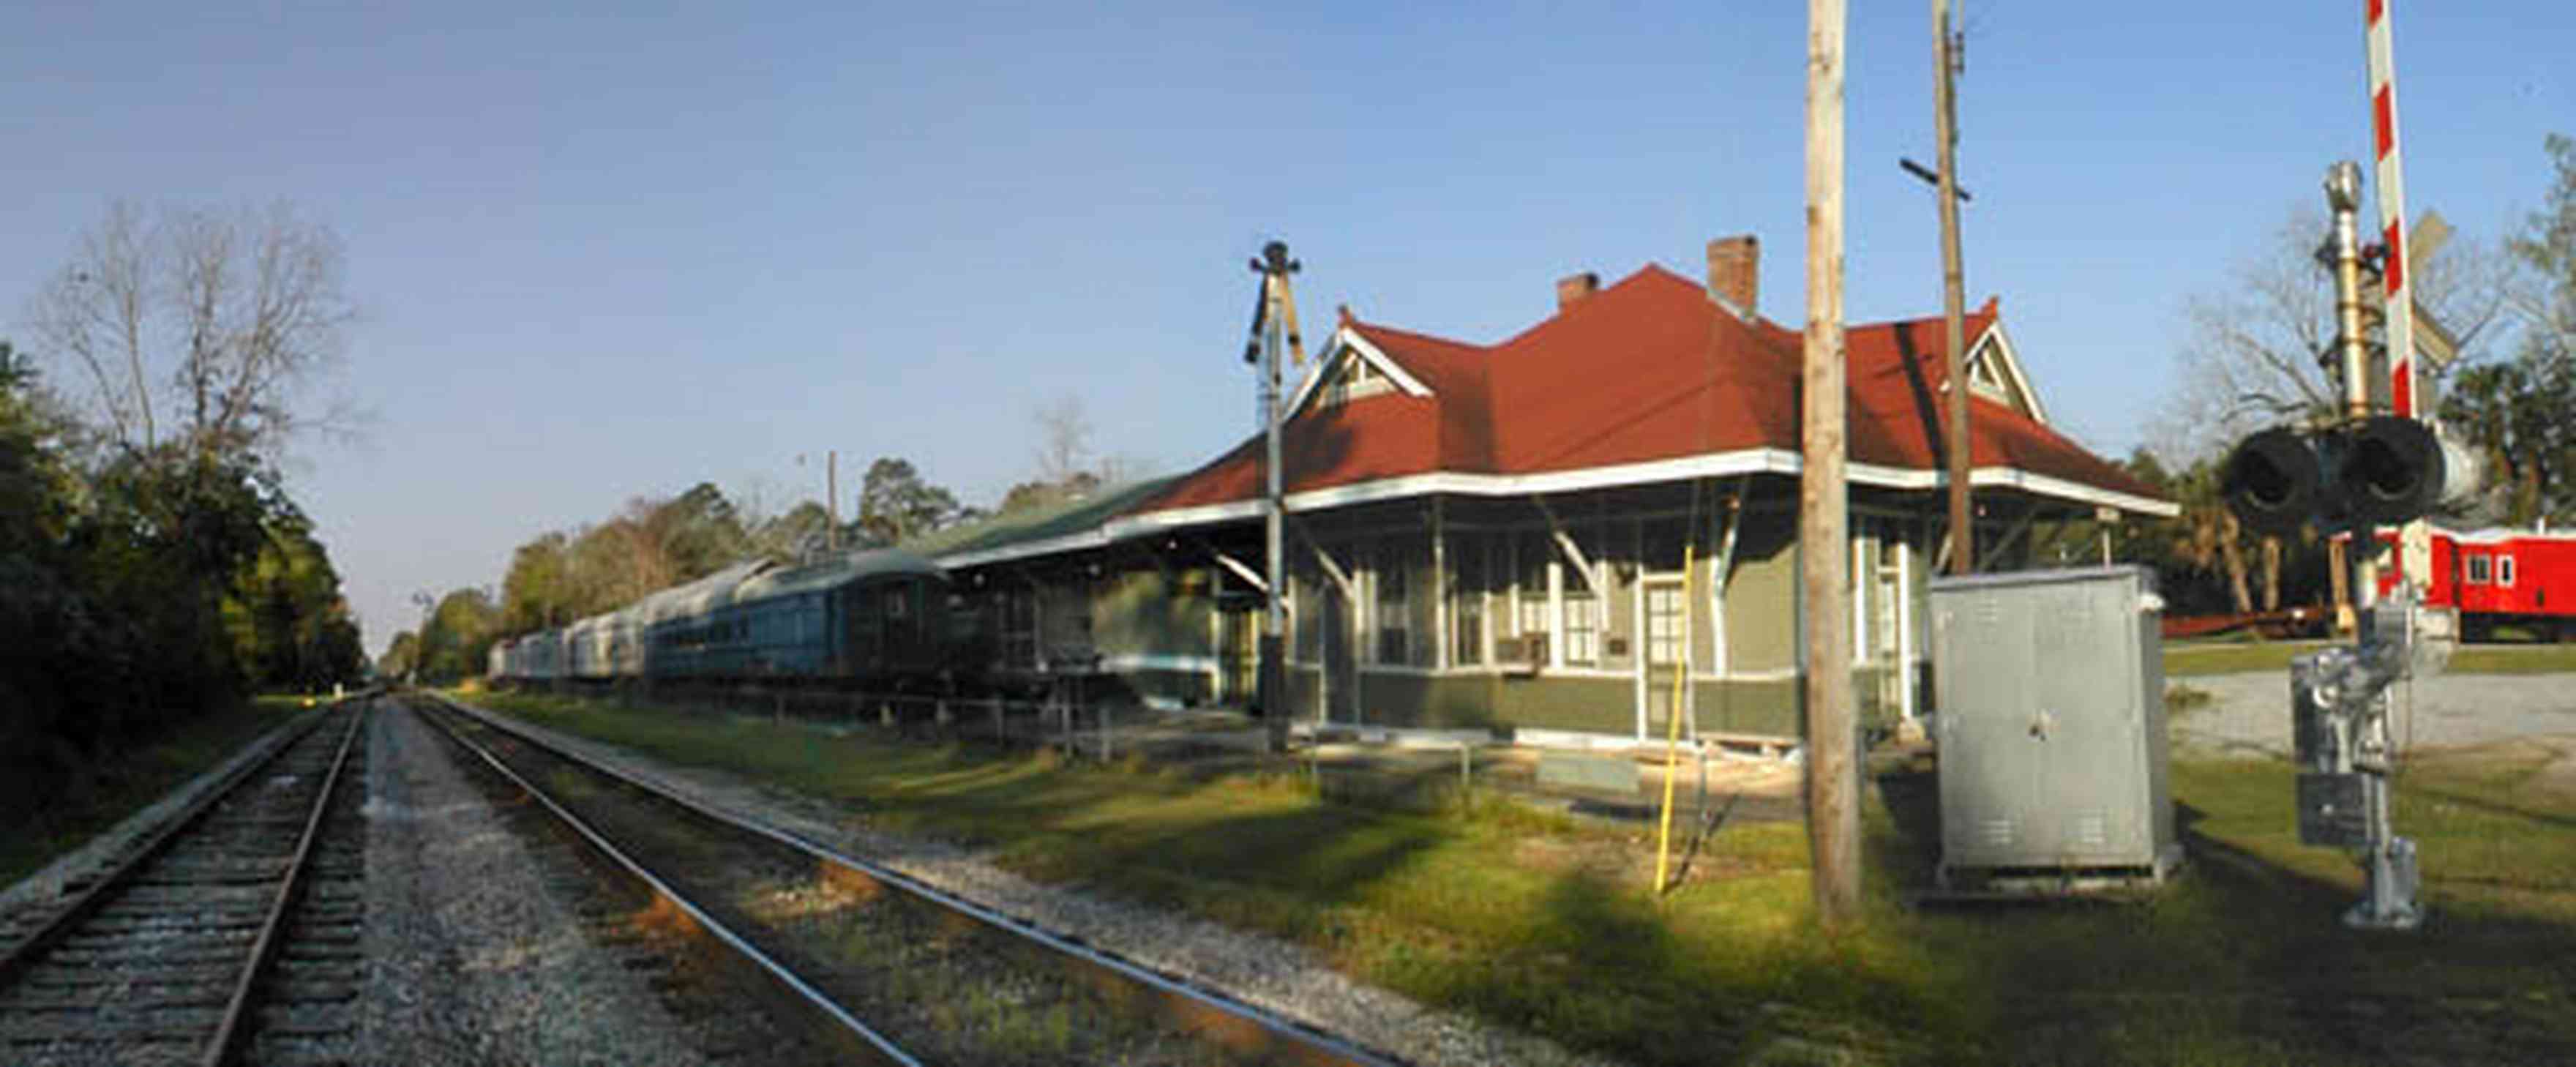 Milton:-L-N-Train-Depot_02.jpg:  train station, csx rail line, caboose, train crossing